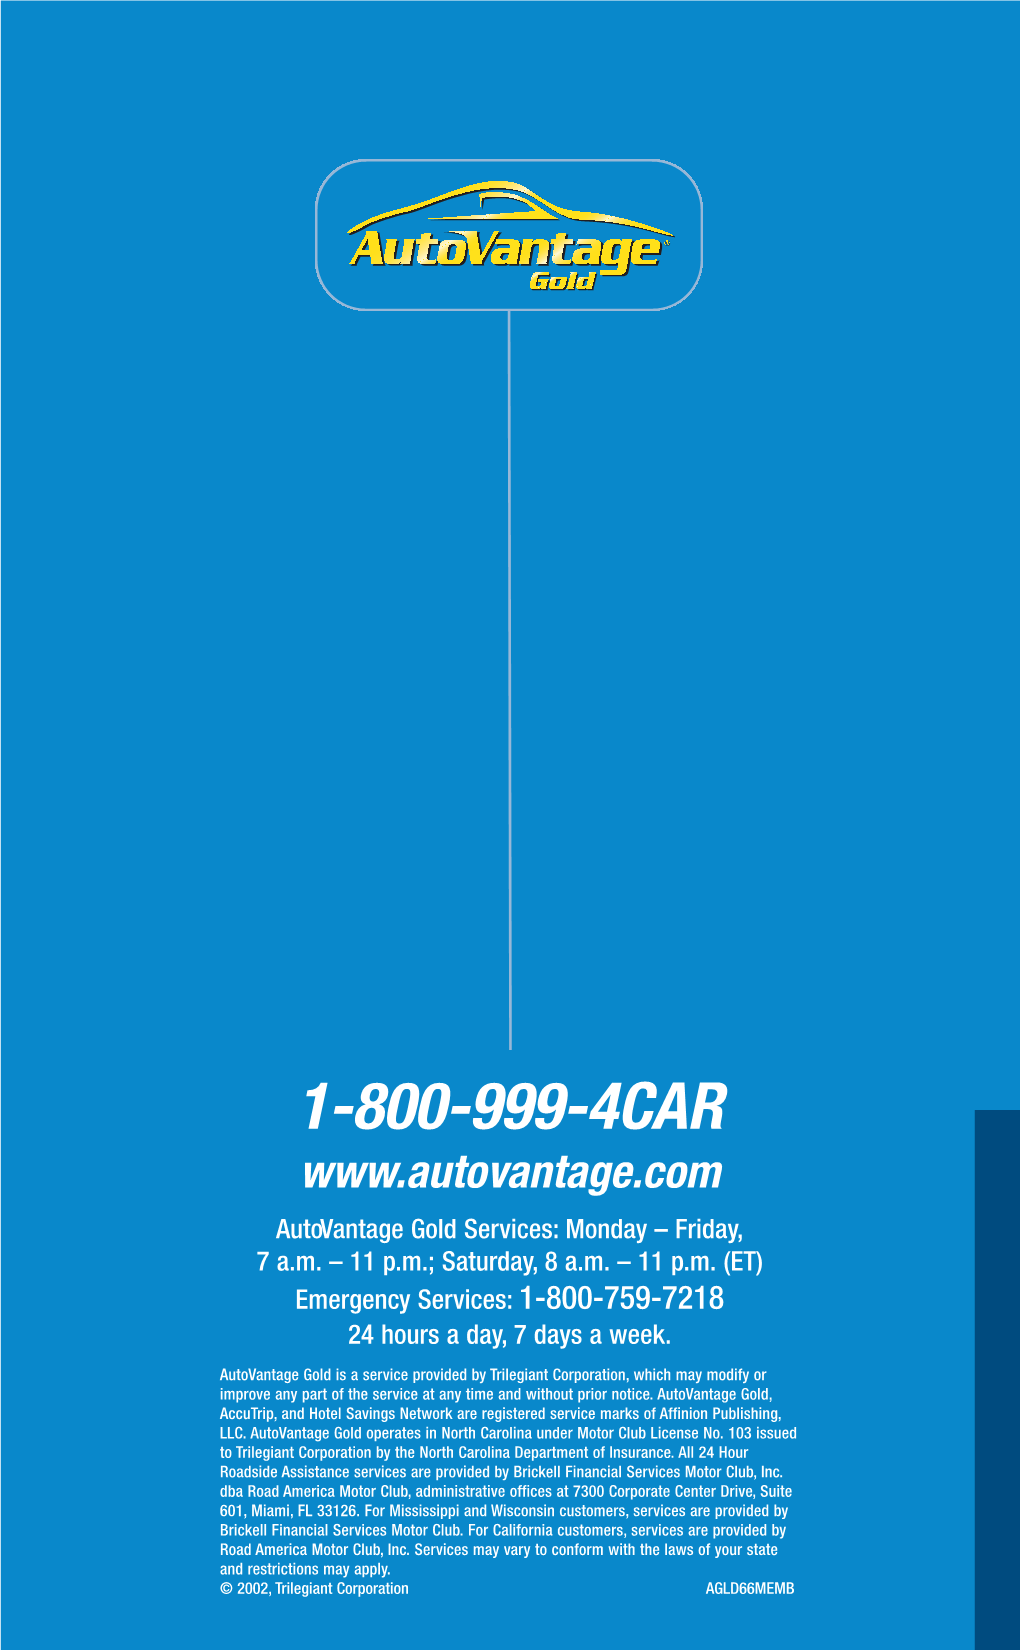 1-800-999-4CAR Autovantage Gold Services: Monday – Friday, 7 A.M